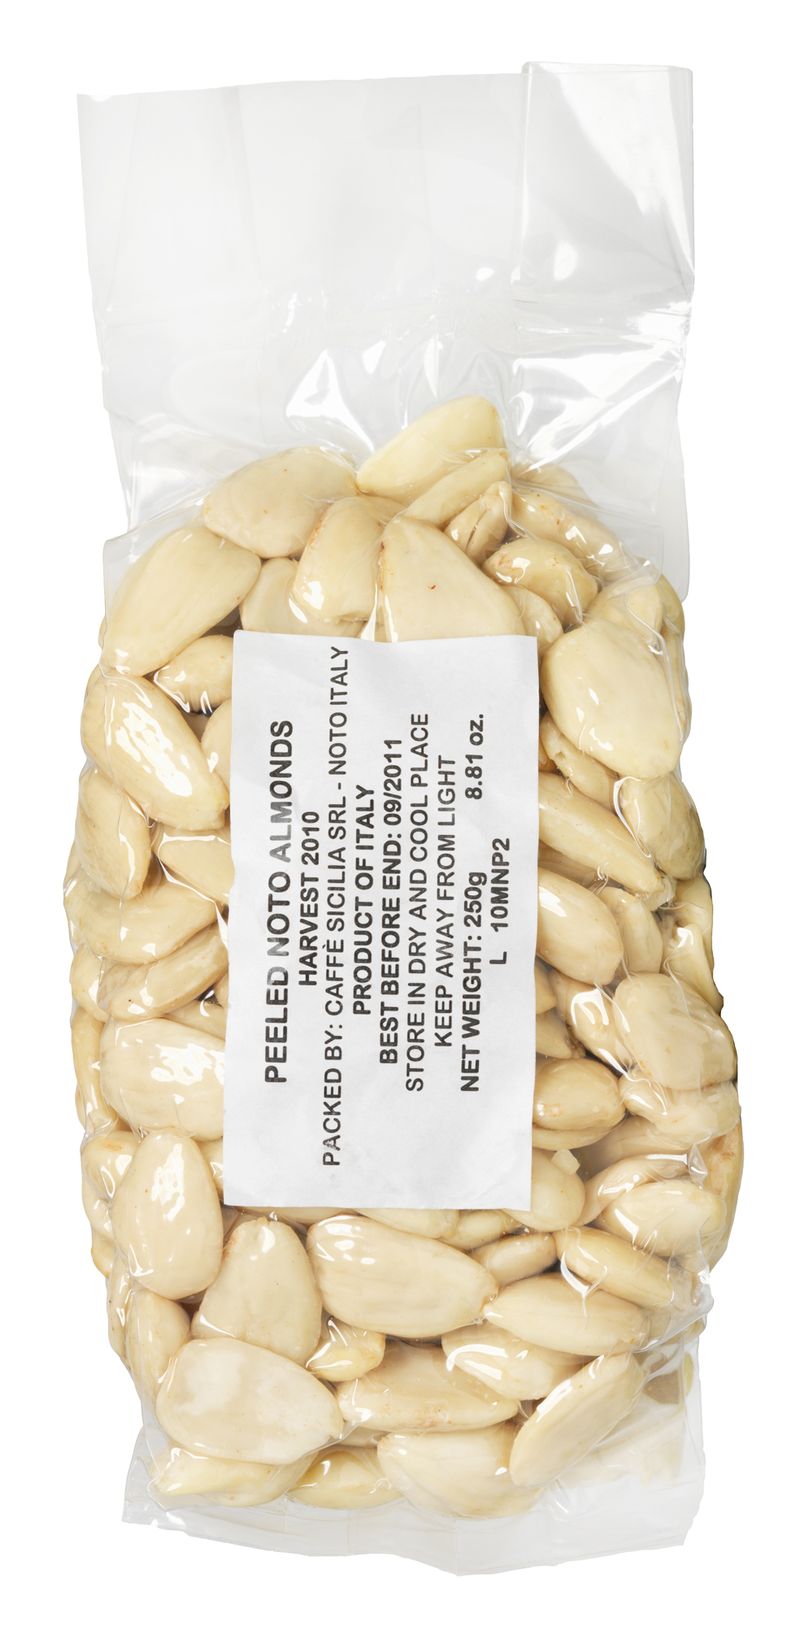 Corrado Assenza's Peeled Almonds